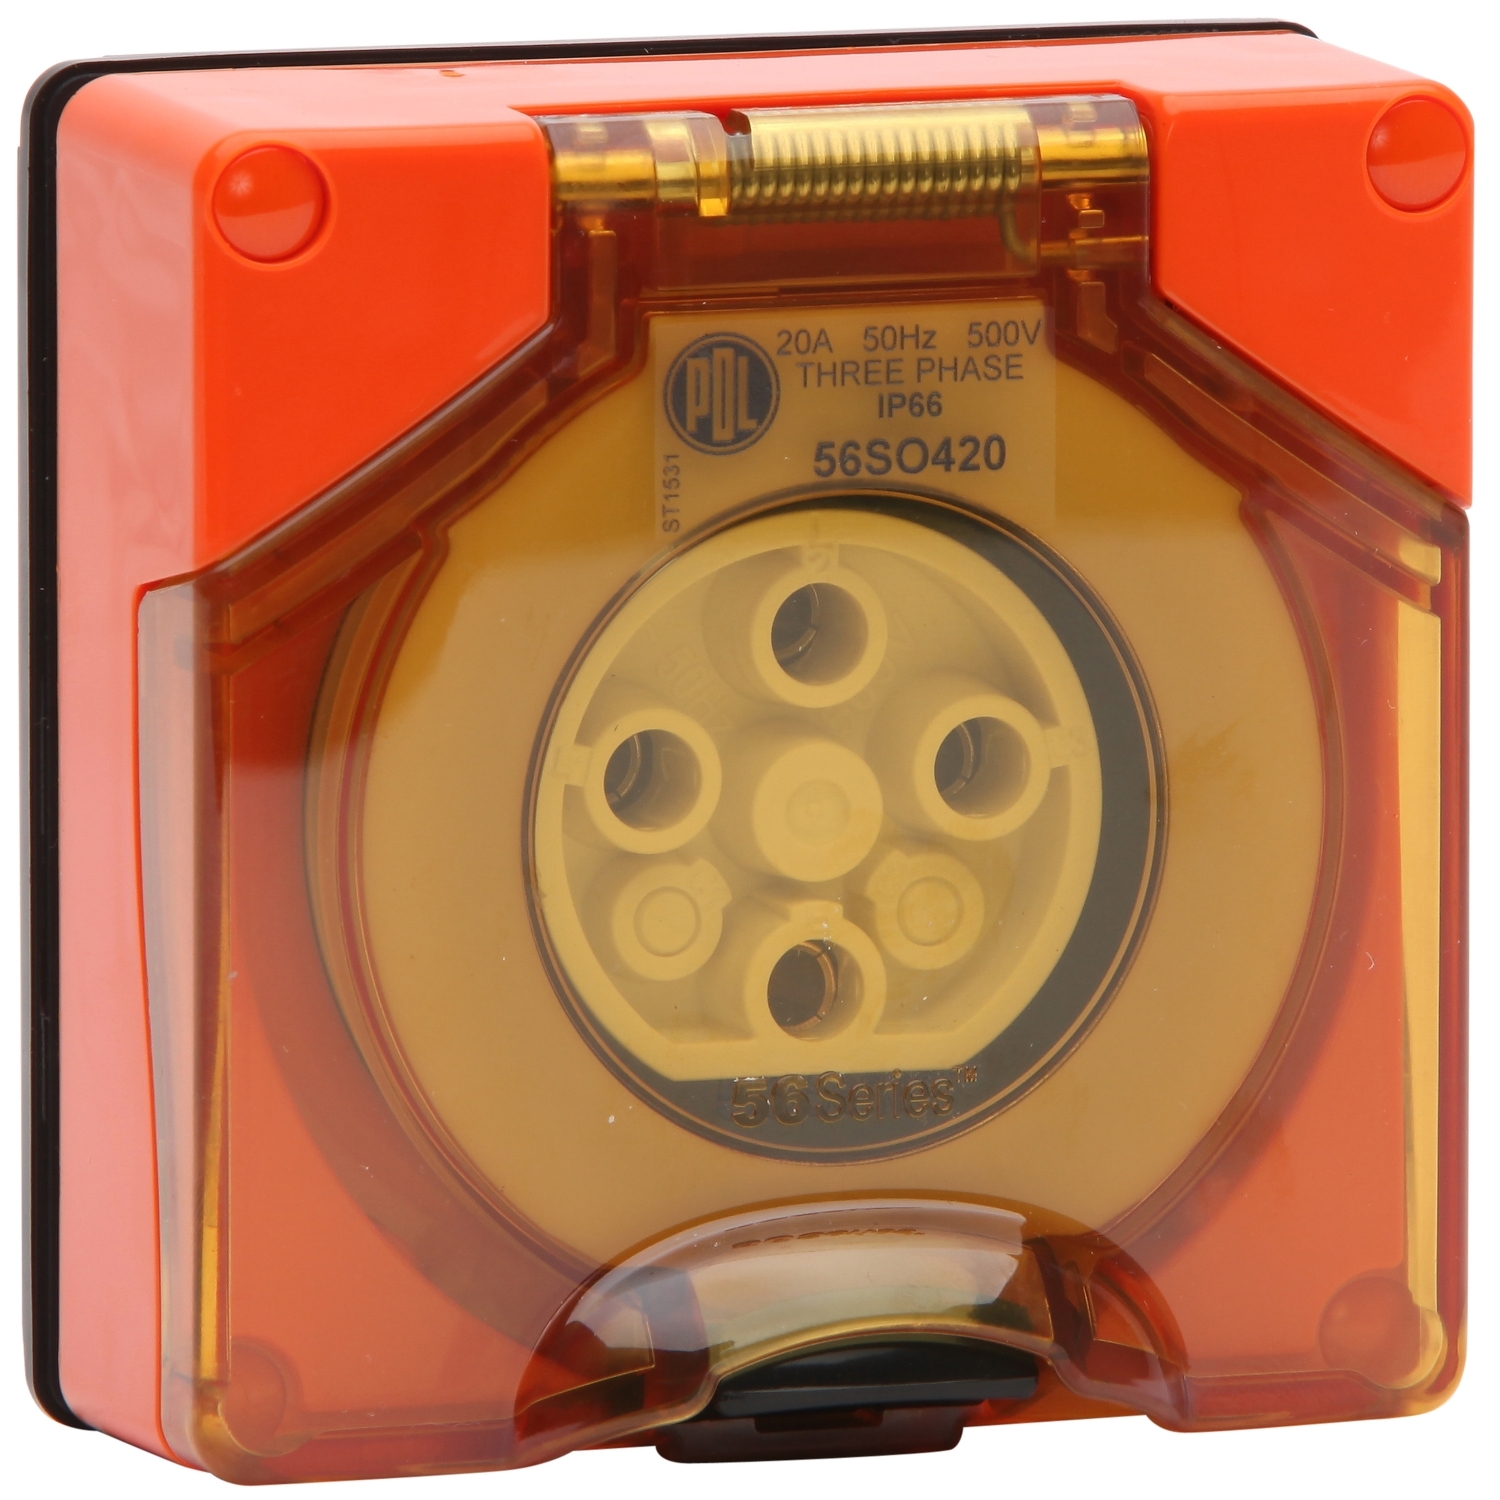 PDL 56 Series - Socket 20A 500V 3-Phase 4-Round Pin IP66 - Chemical-Resistant Orange